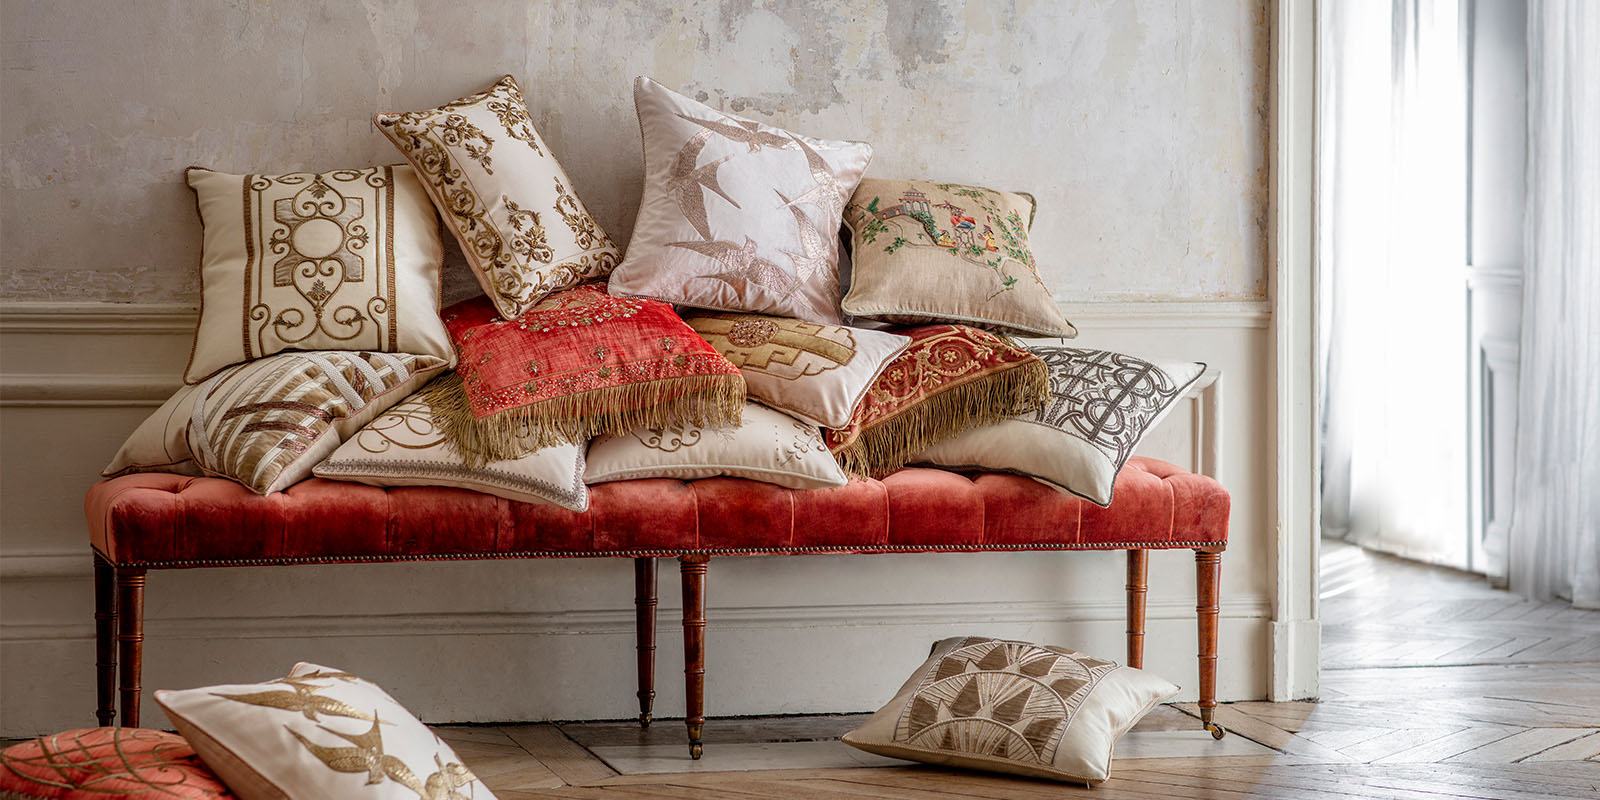 Cushions - Beaumont & Fletcher